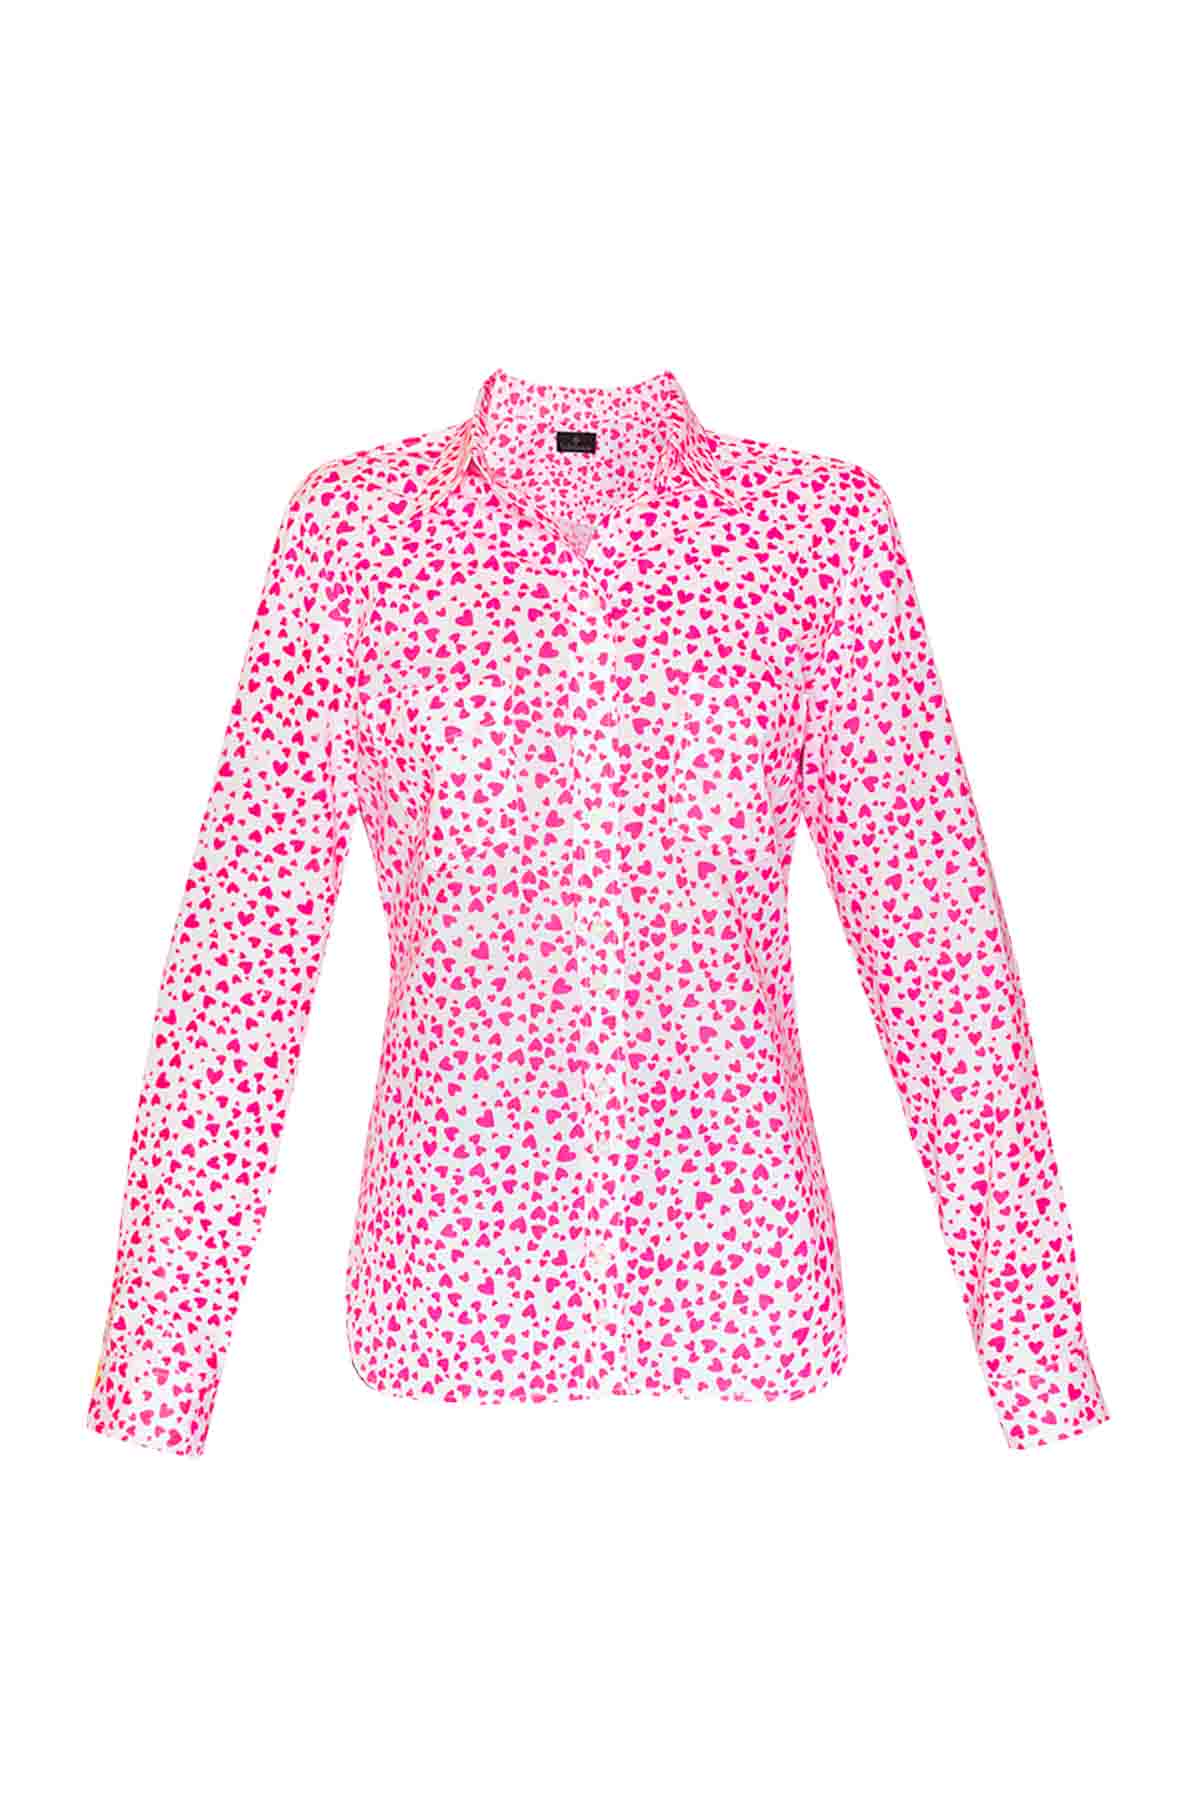 Women's Cotton Shirt - Pink Hearts